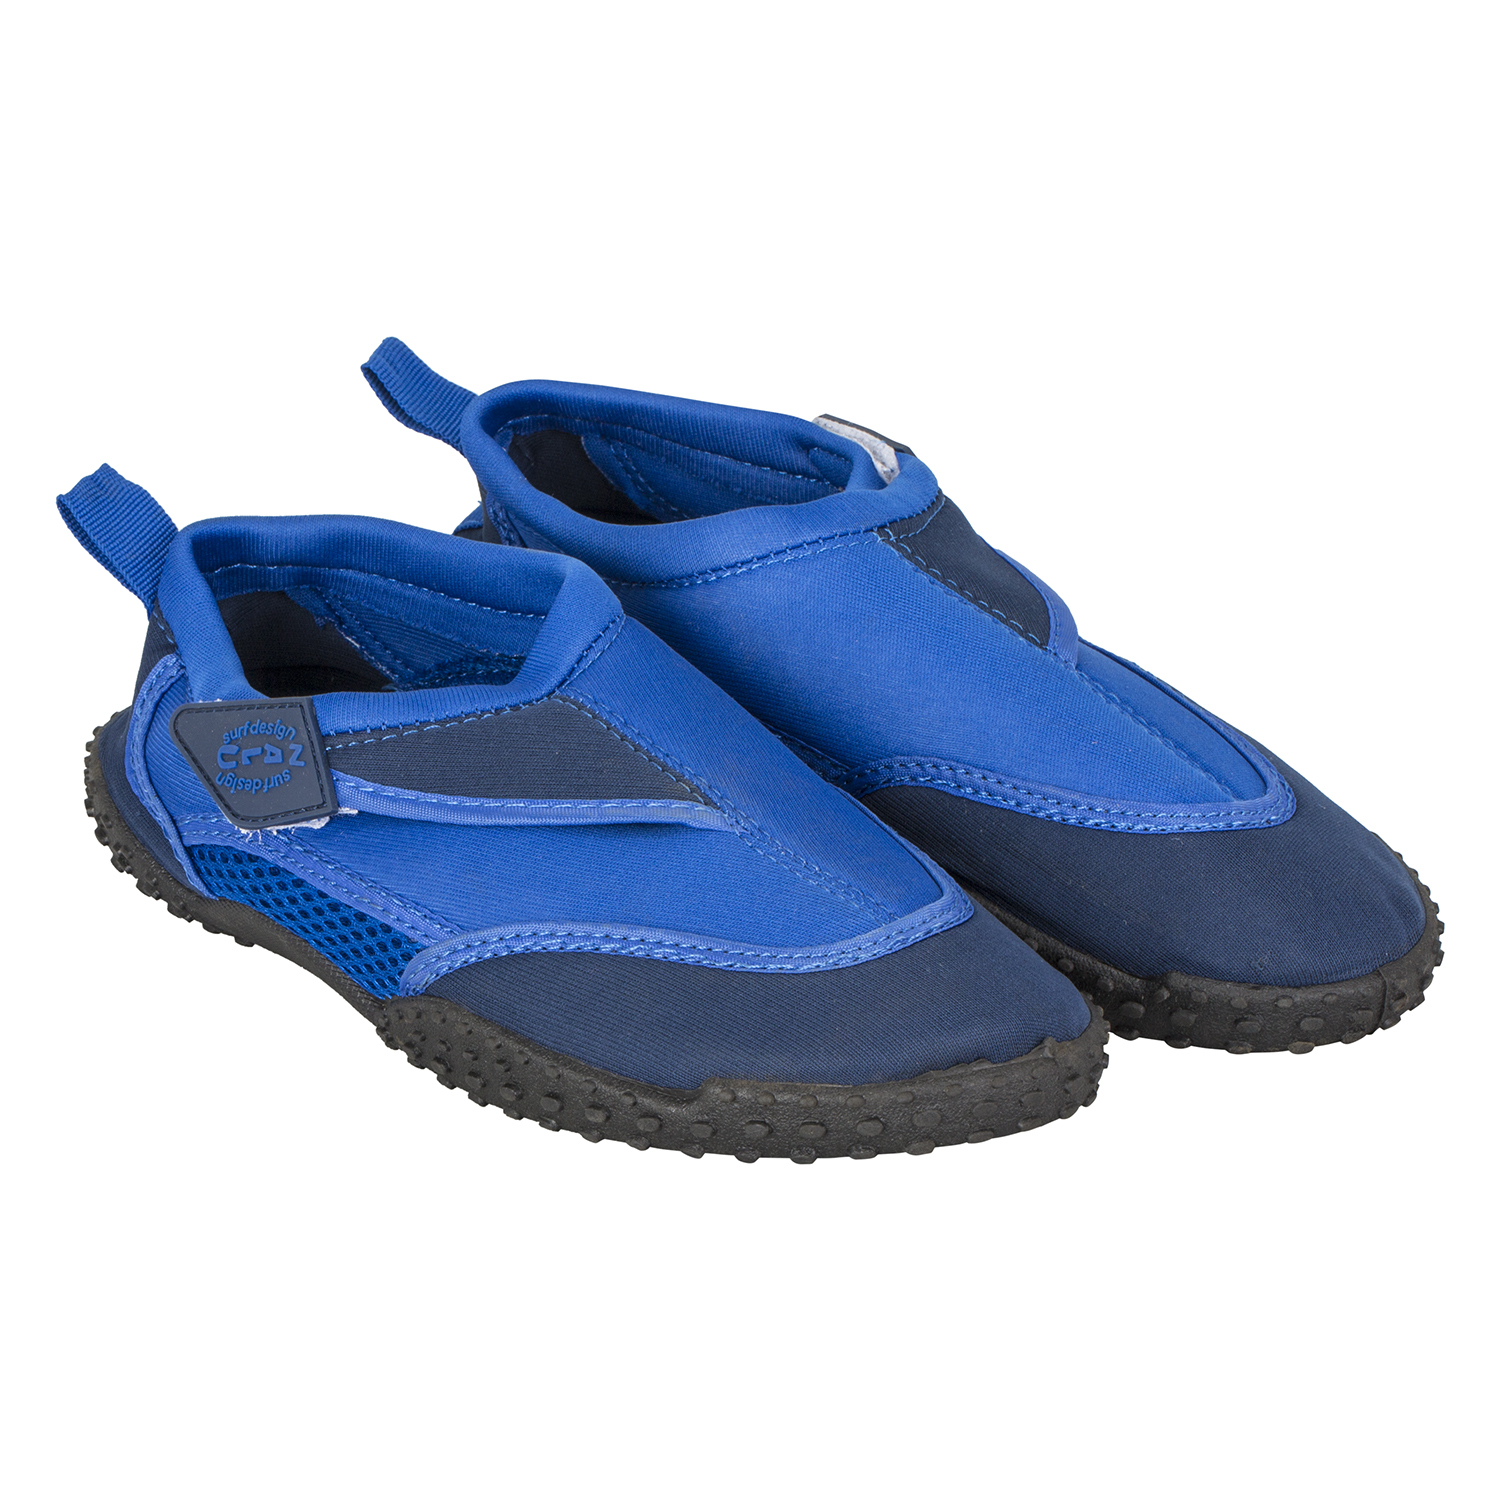 Child's Aqua Shoes - 1 Image 1